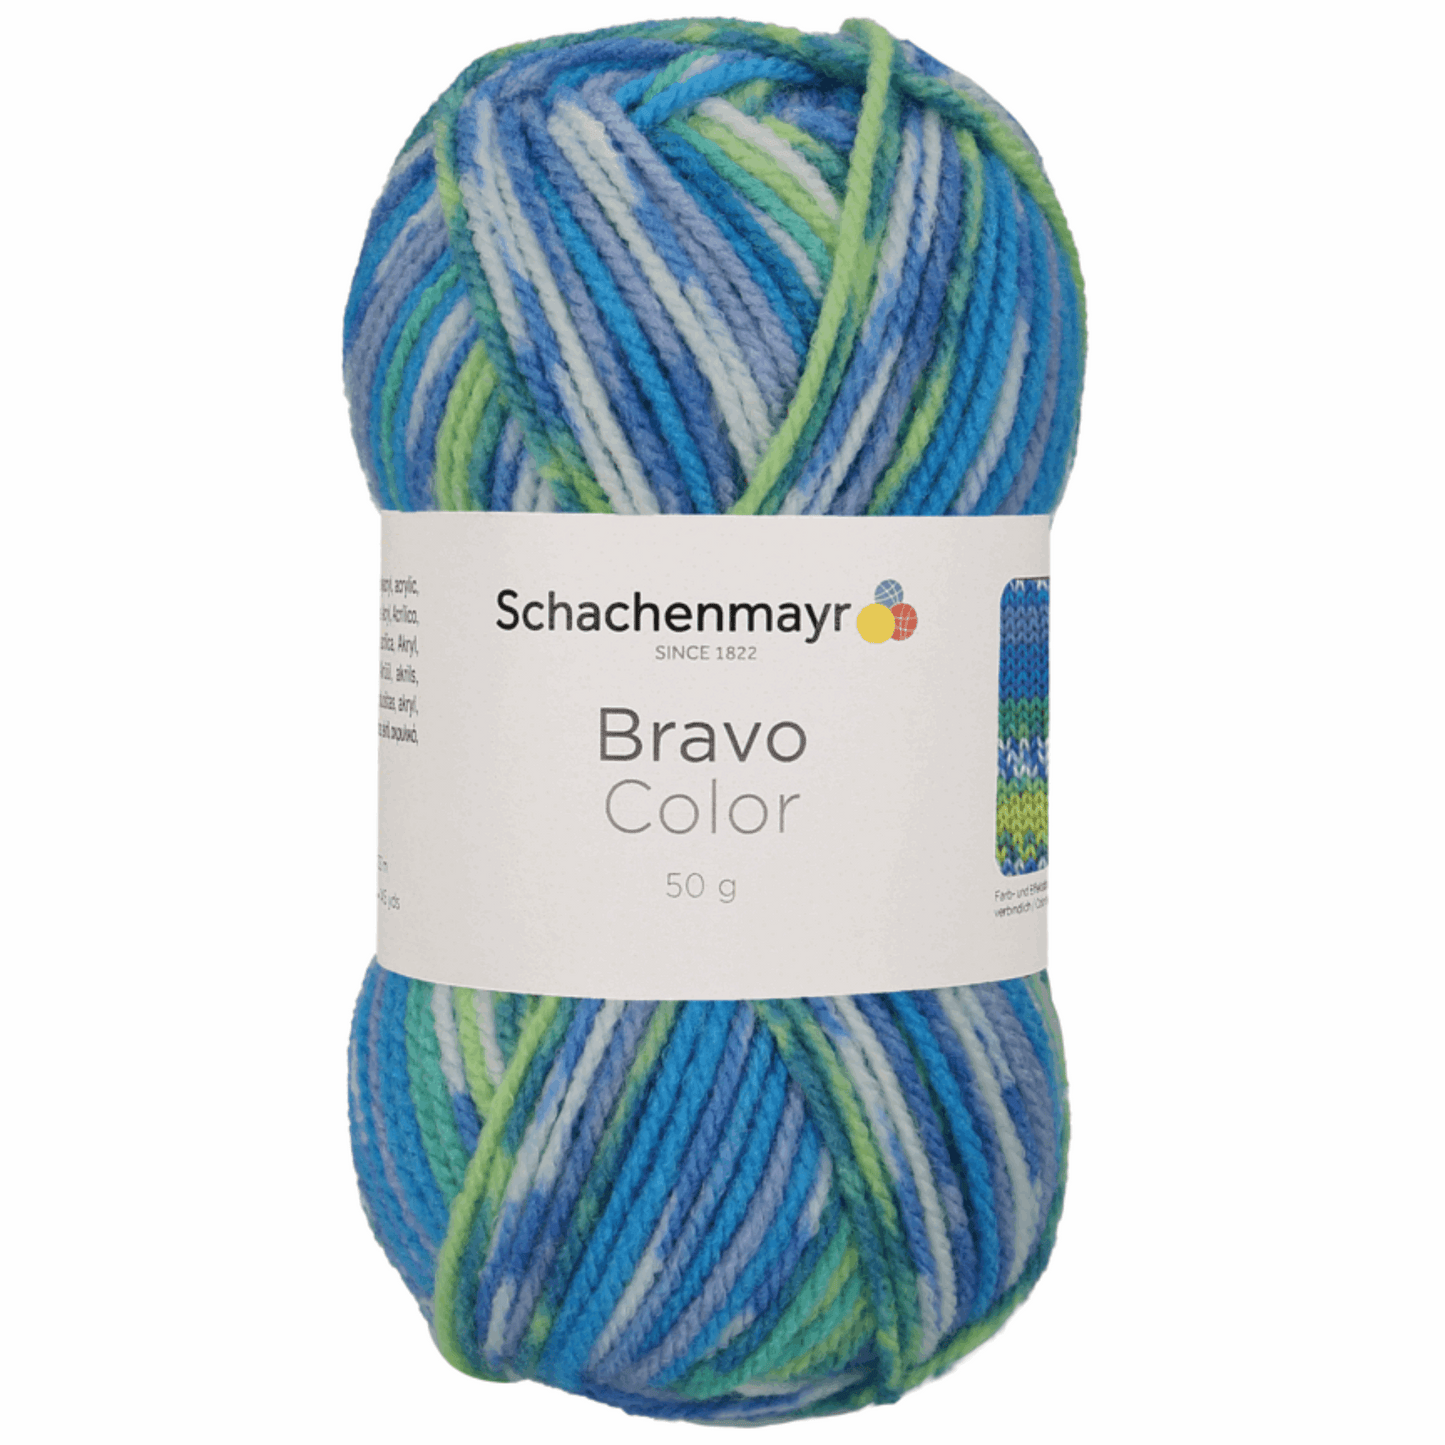 Schachenmayr Bravo Color 50g, 90421, Farbe Aqua Jaquard 2080